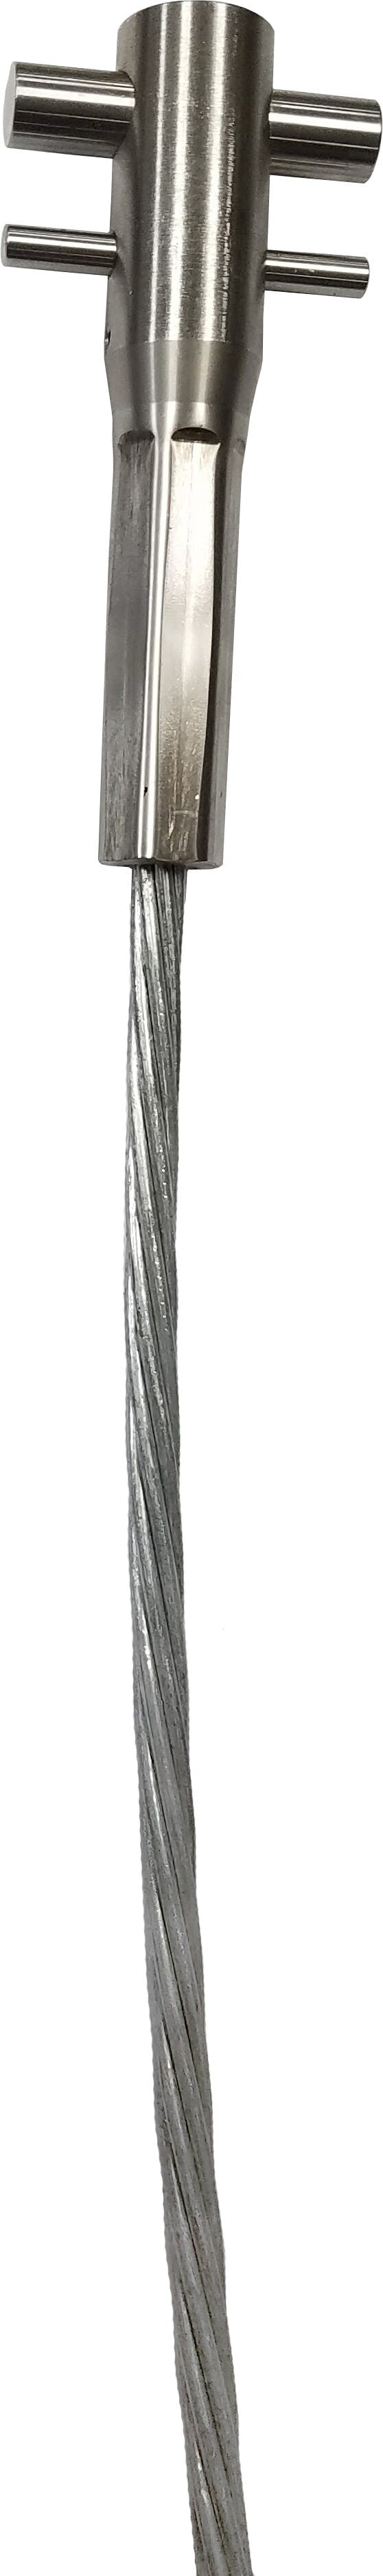 3M™ DBI-SALA® Lad-Saf™ Swaged Cable 6115002, 3/8 Inch, Galvanized Steel, 6m